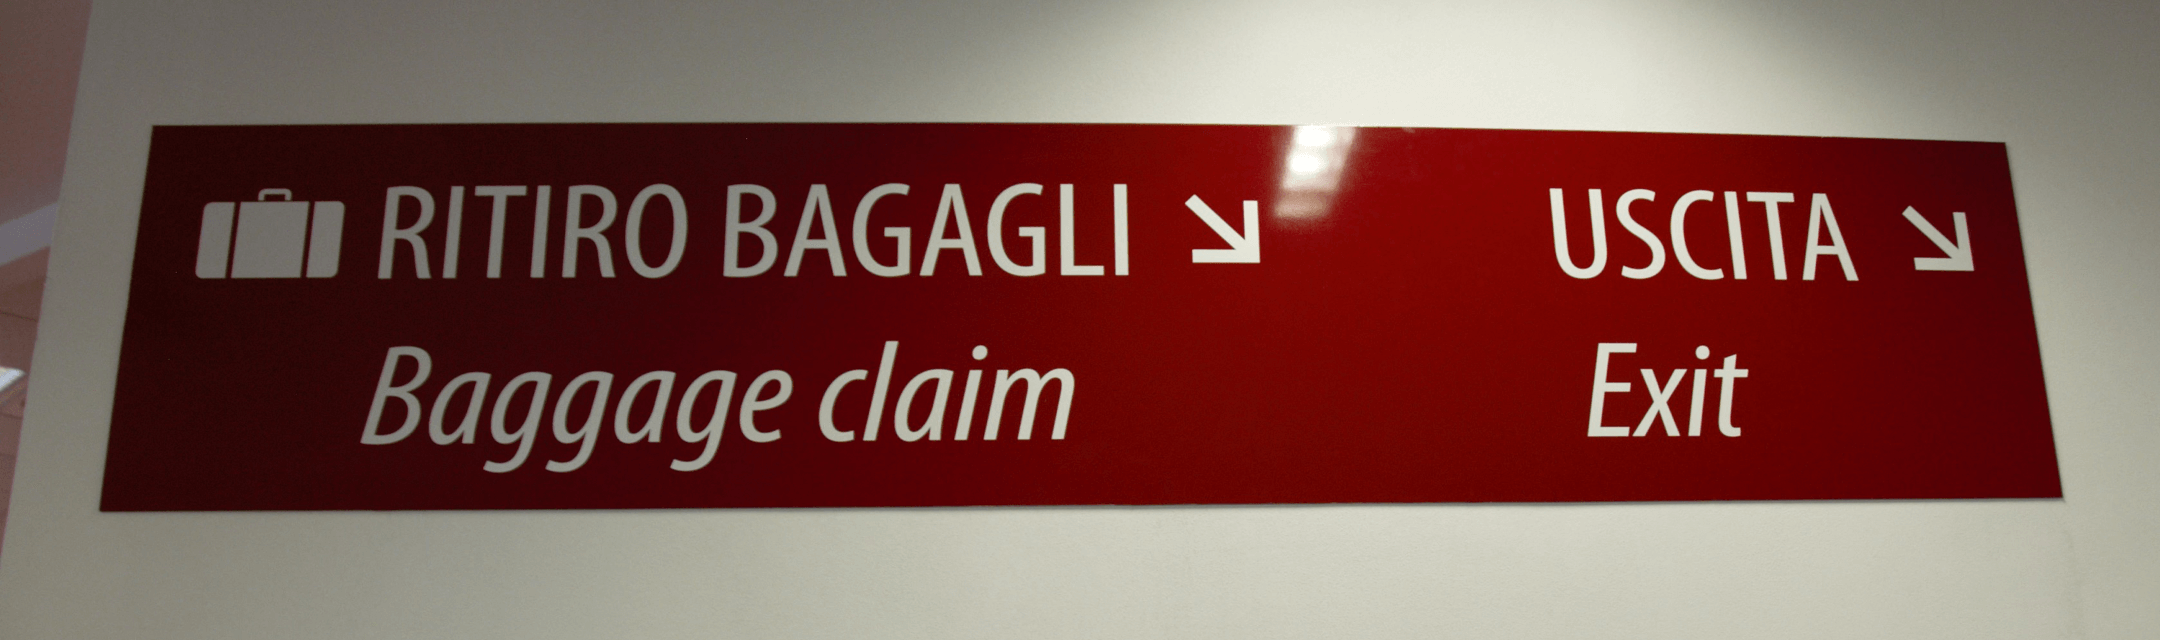 Luggage claim